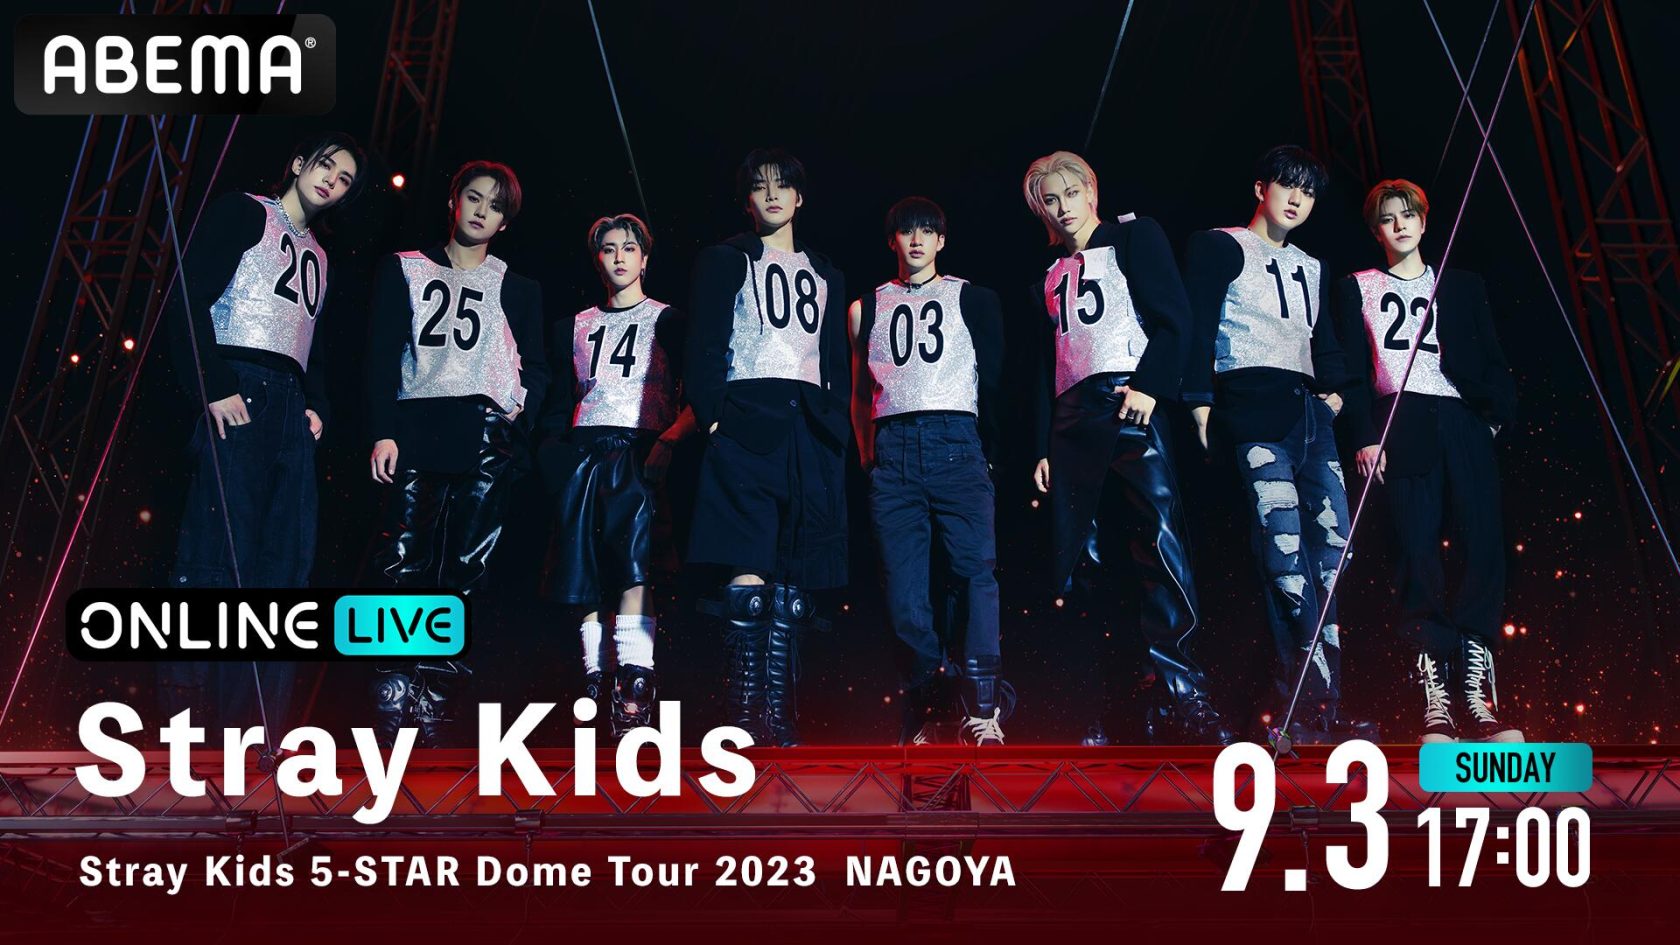 Stray Kids 日本初ドームツアーをABEMA生配信!「Stray Kids 5ーSTAR Dome Tour 2023」名古屋&大阪公演 